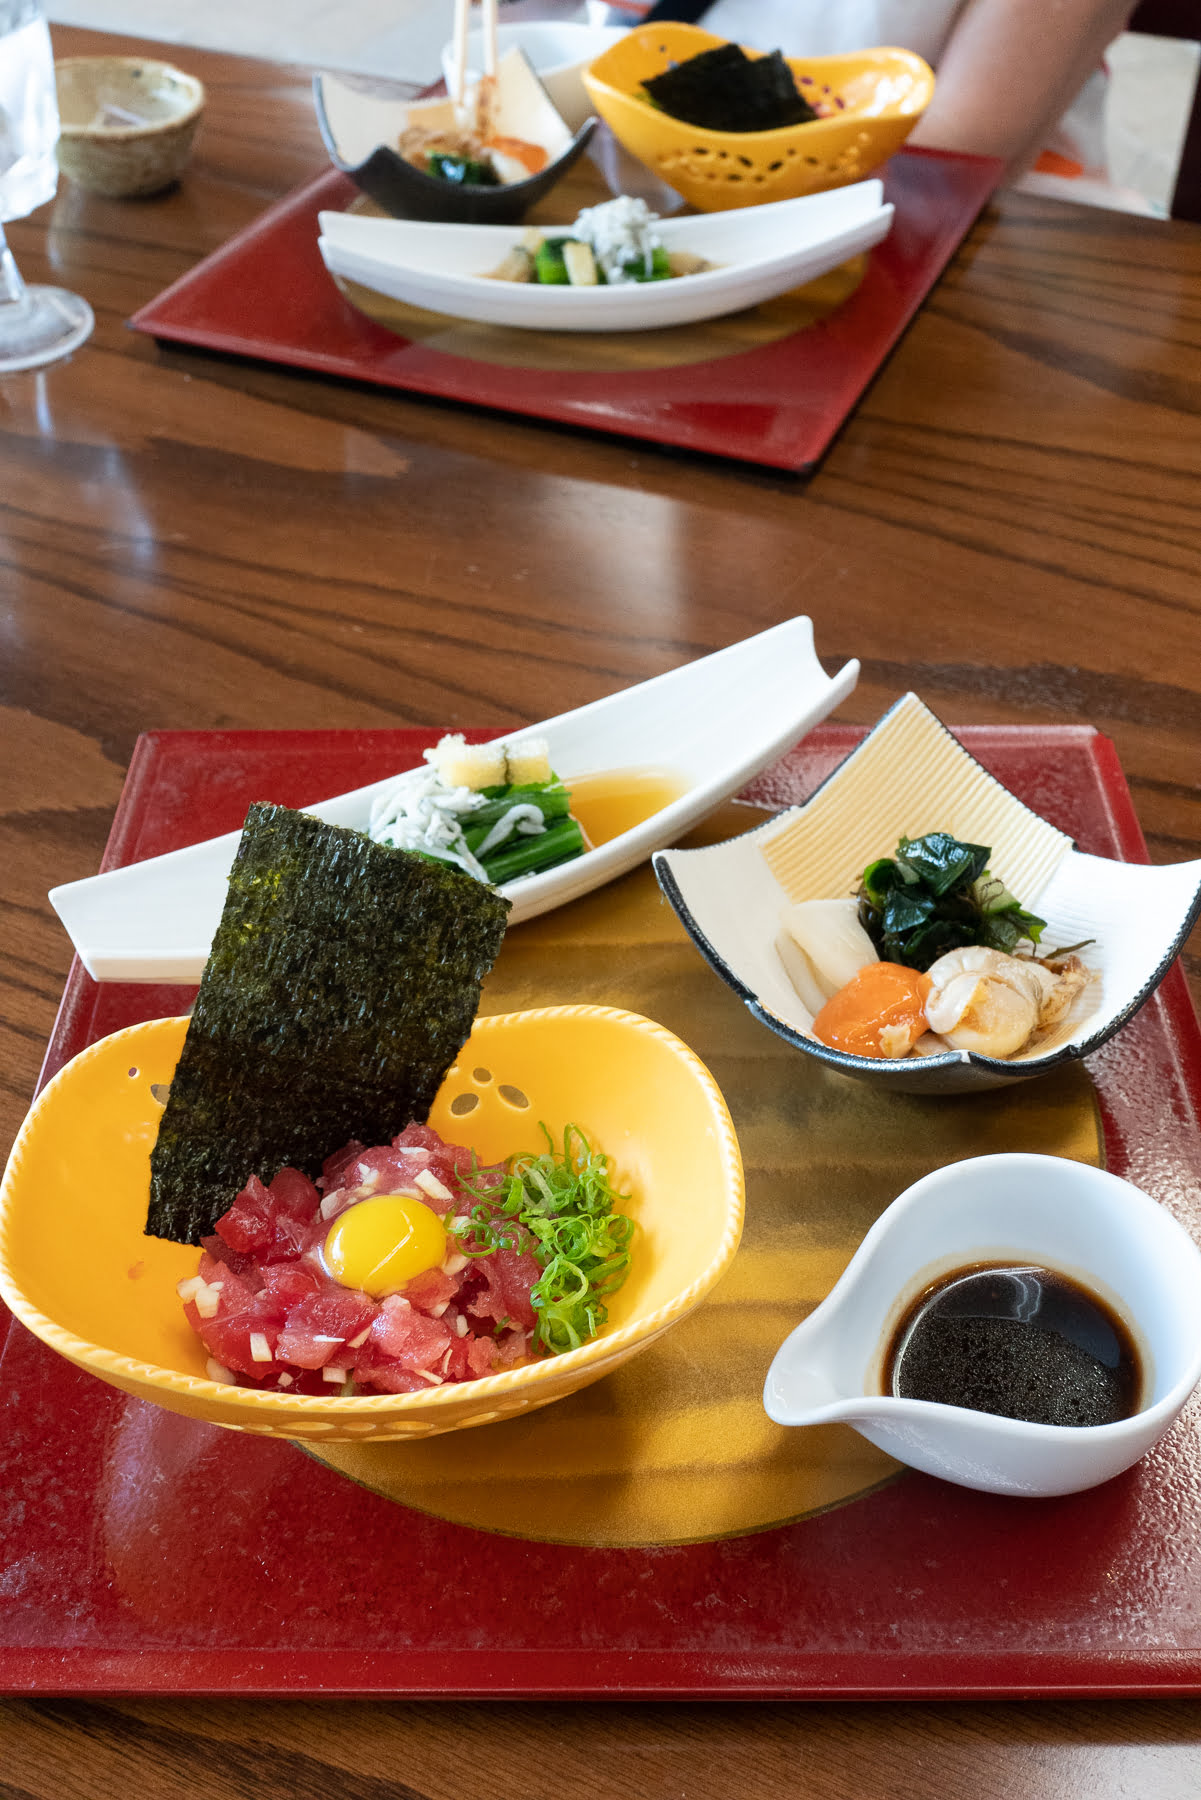 Course 1 of the Shusaizen Set from Restaurant Suntory, featuring Tuna Tartar with Heart of Palm, Avocado, and Quail Egg, Scallop and Squid Nuta, and Choy Sum Karashi-zuke.